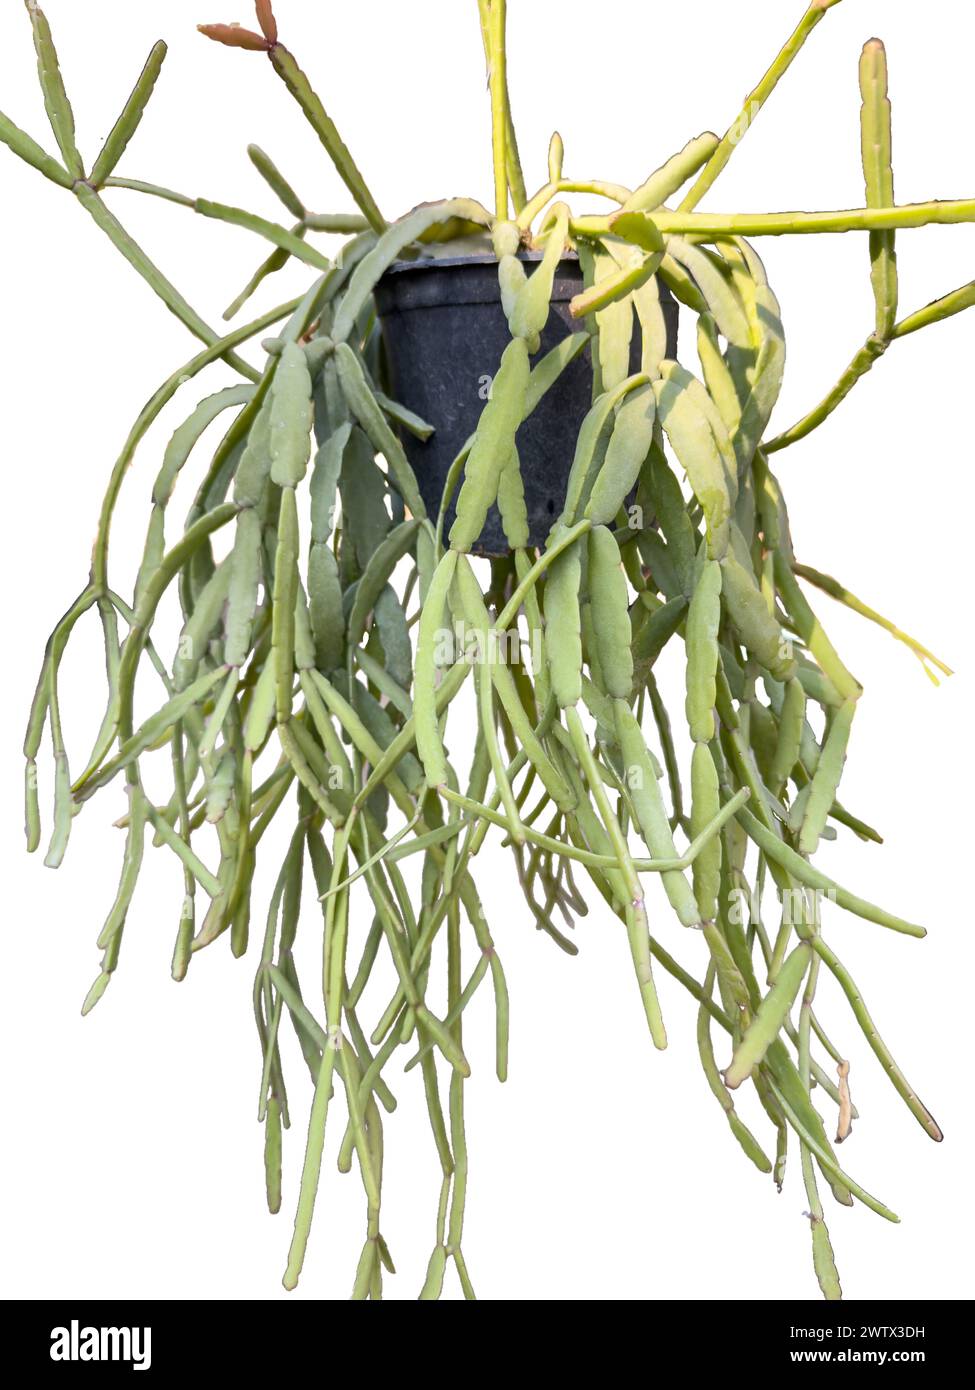 Rhipsalis epiphytic cactus in a hanging pot on white isolated background Stock Photo